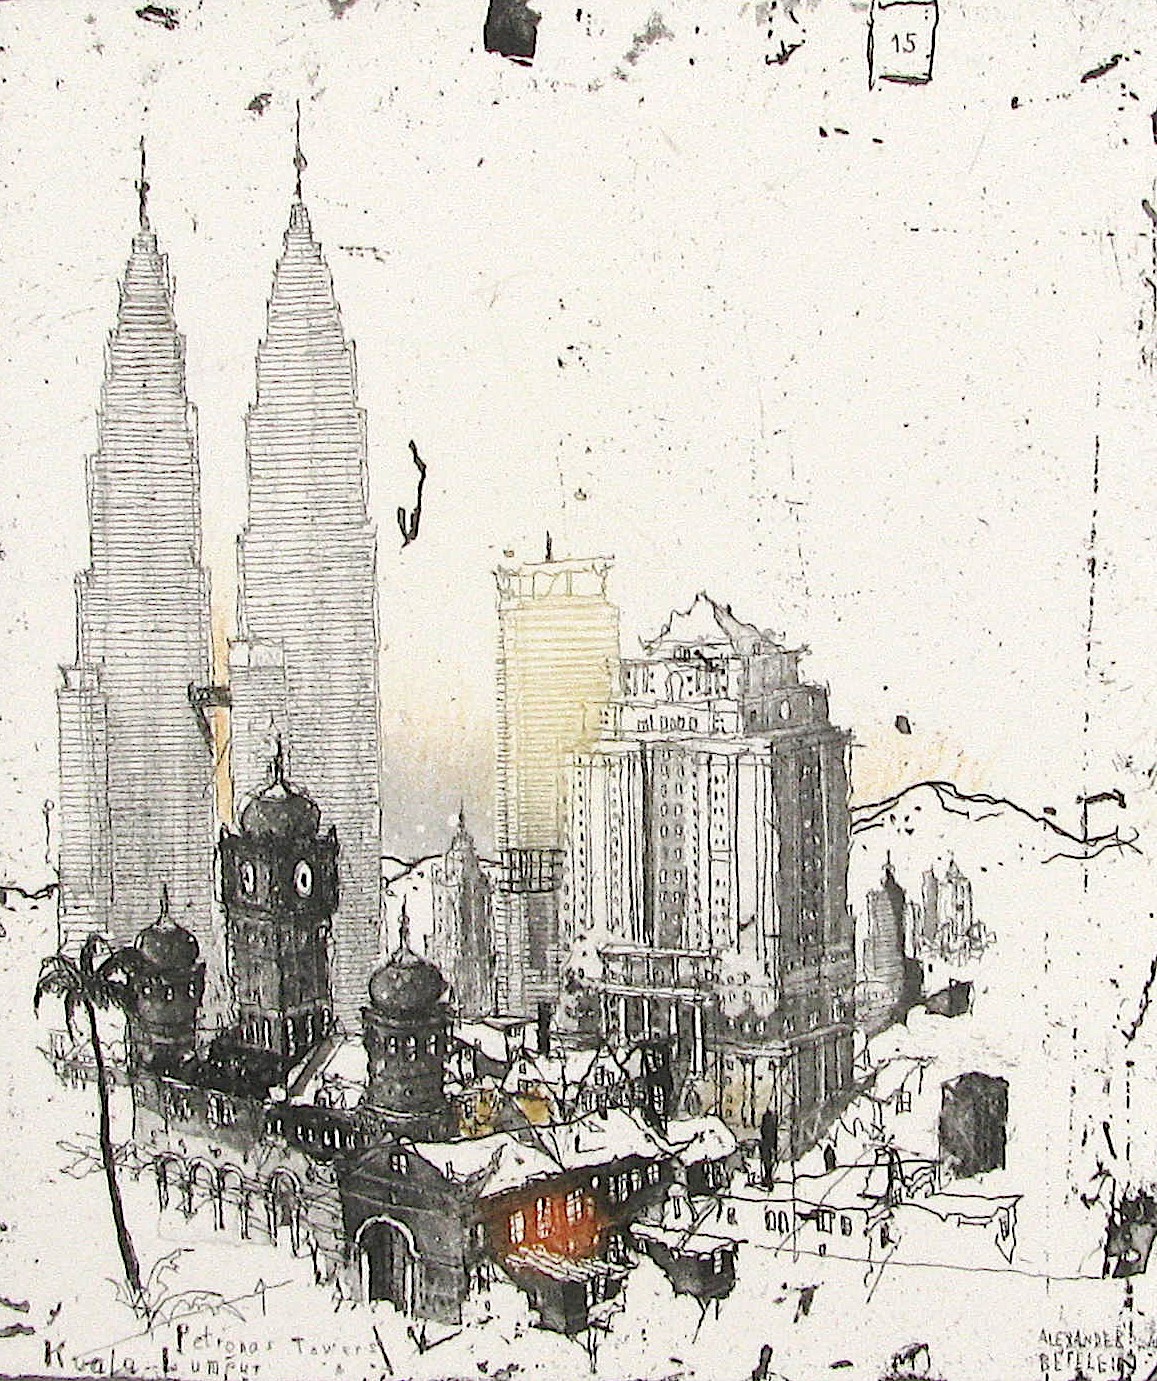 Kuala Lumpur - Befelein, Alexander - k-gk790